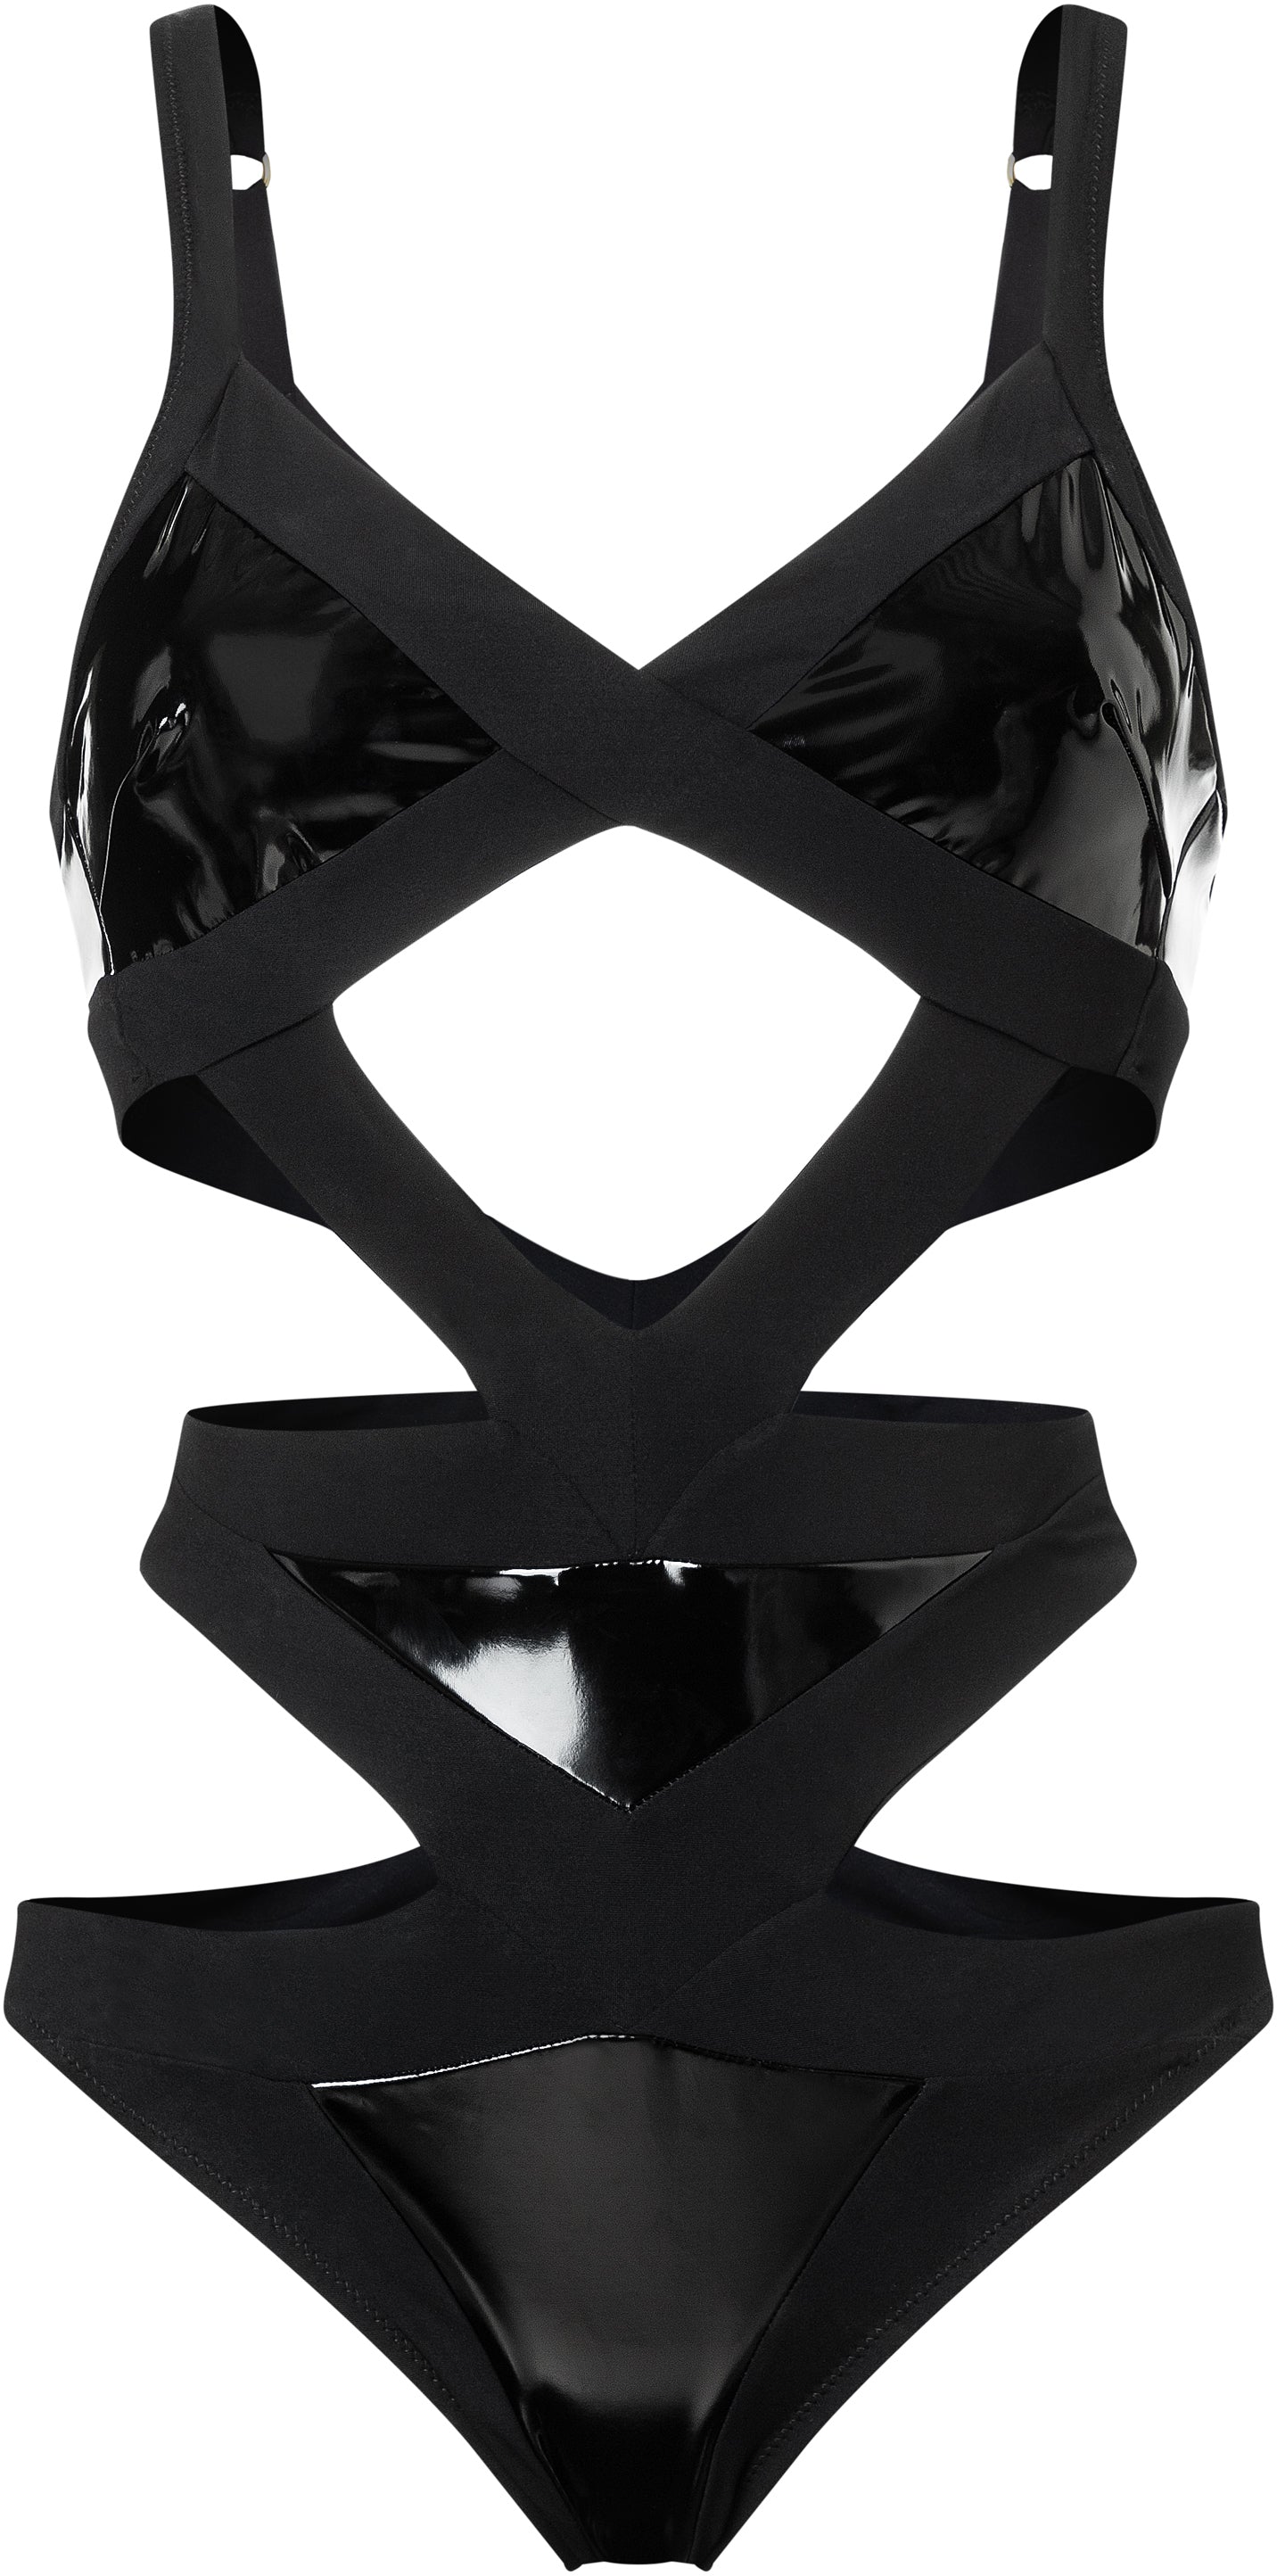 Eniqua - Dark Black Harness